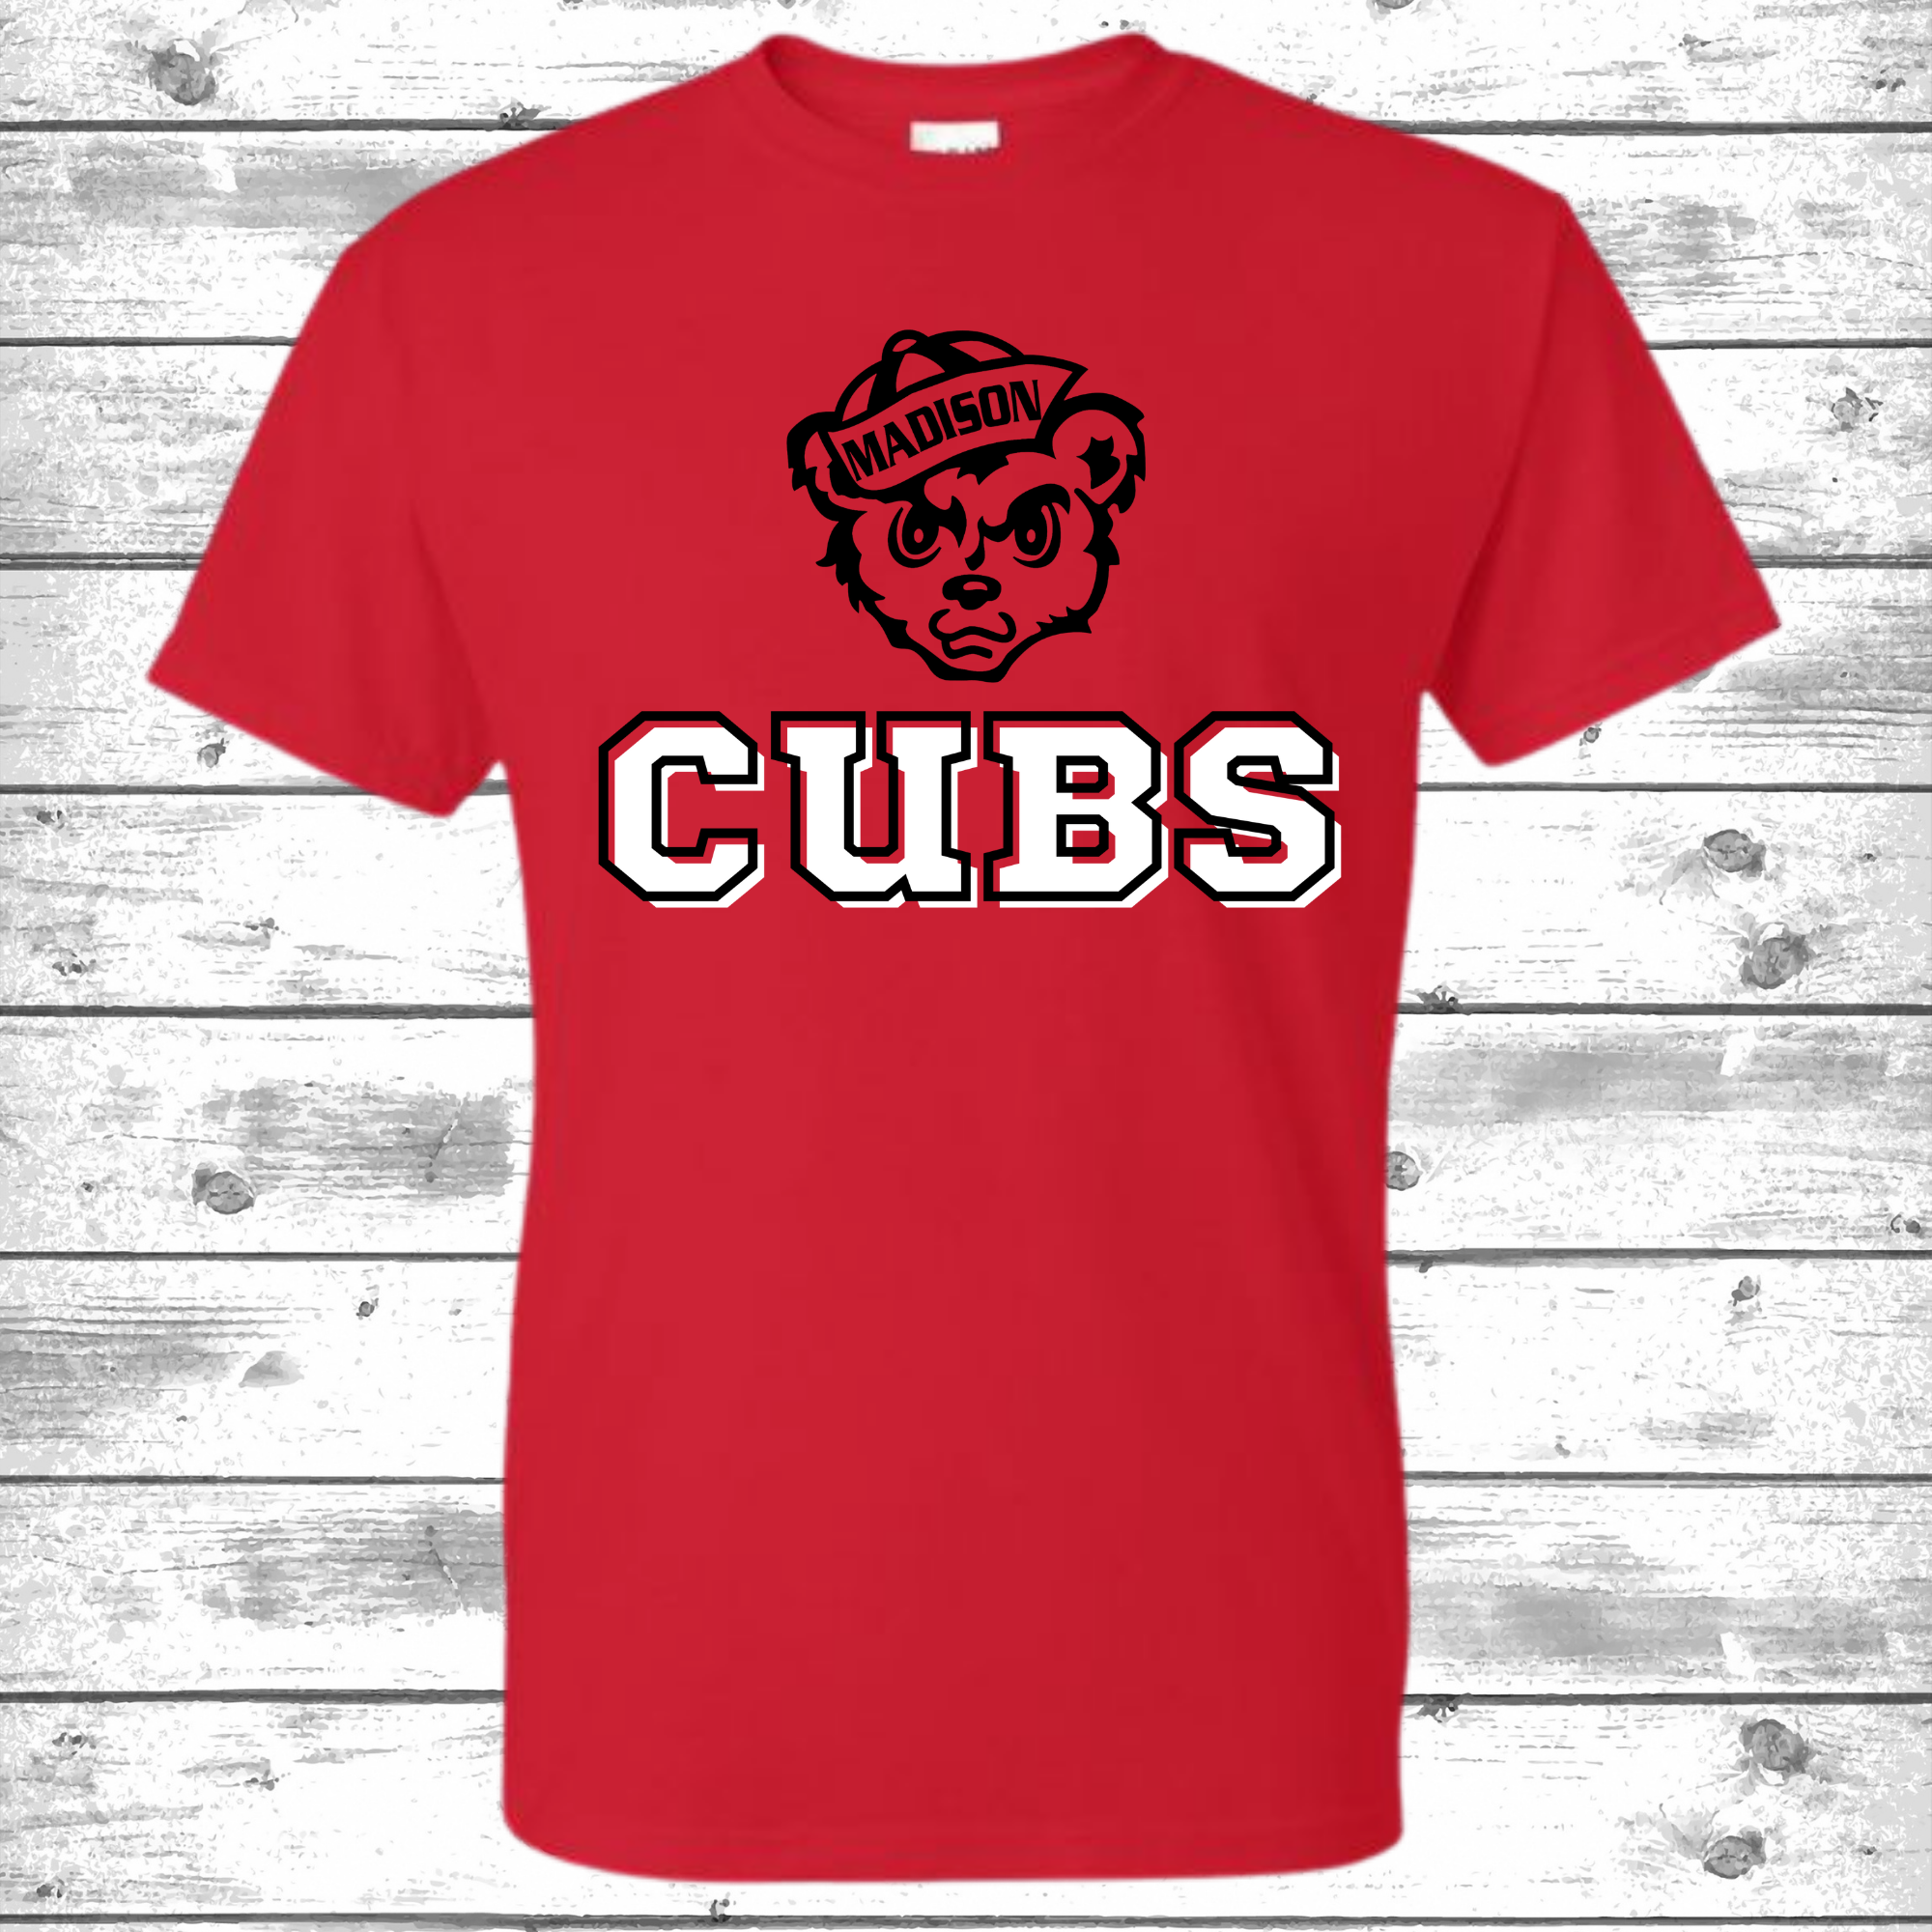 Madison Cubs.3